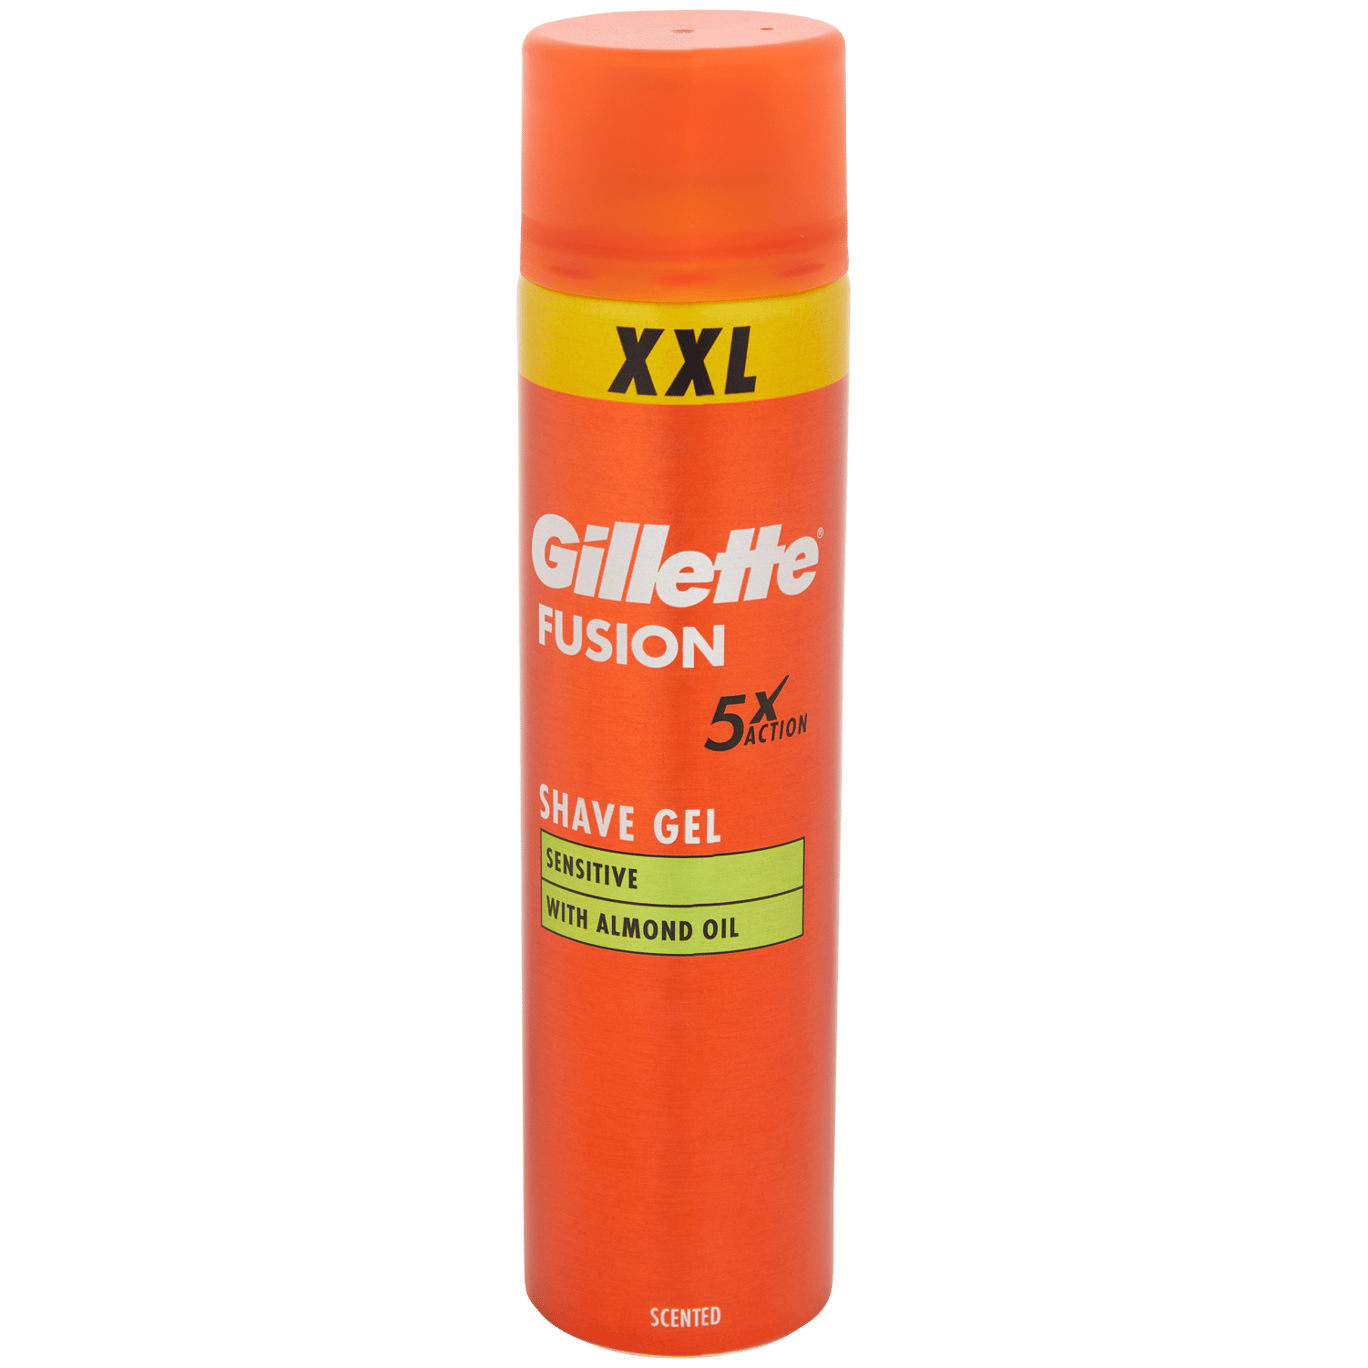 Gillette Gel à raser Gillette Fusion XXL